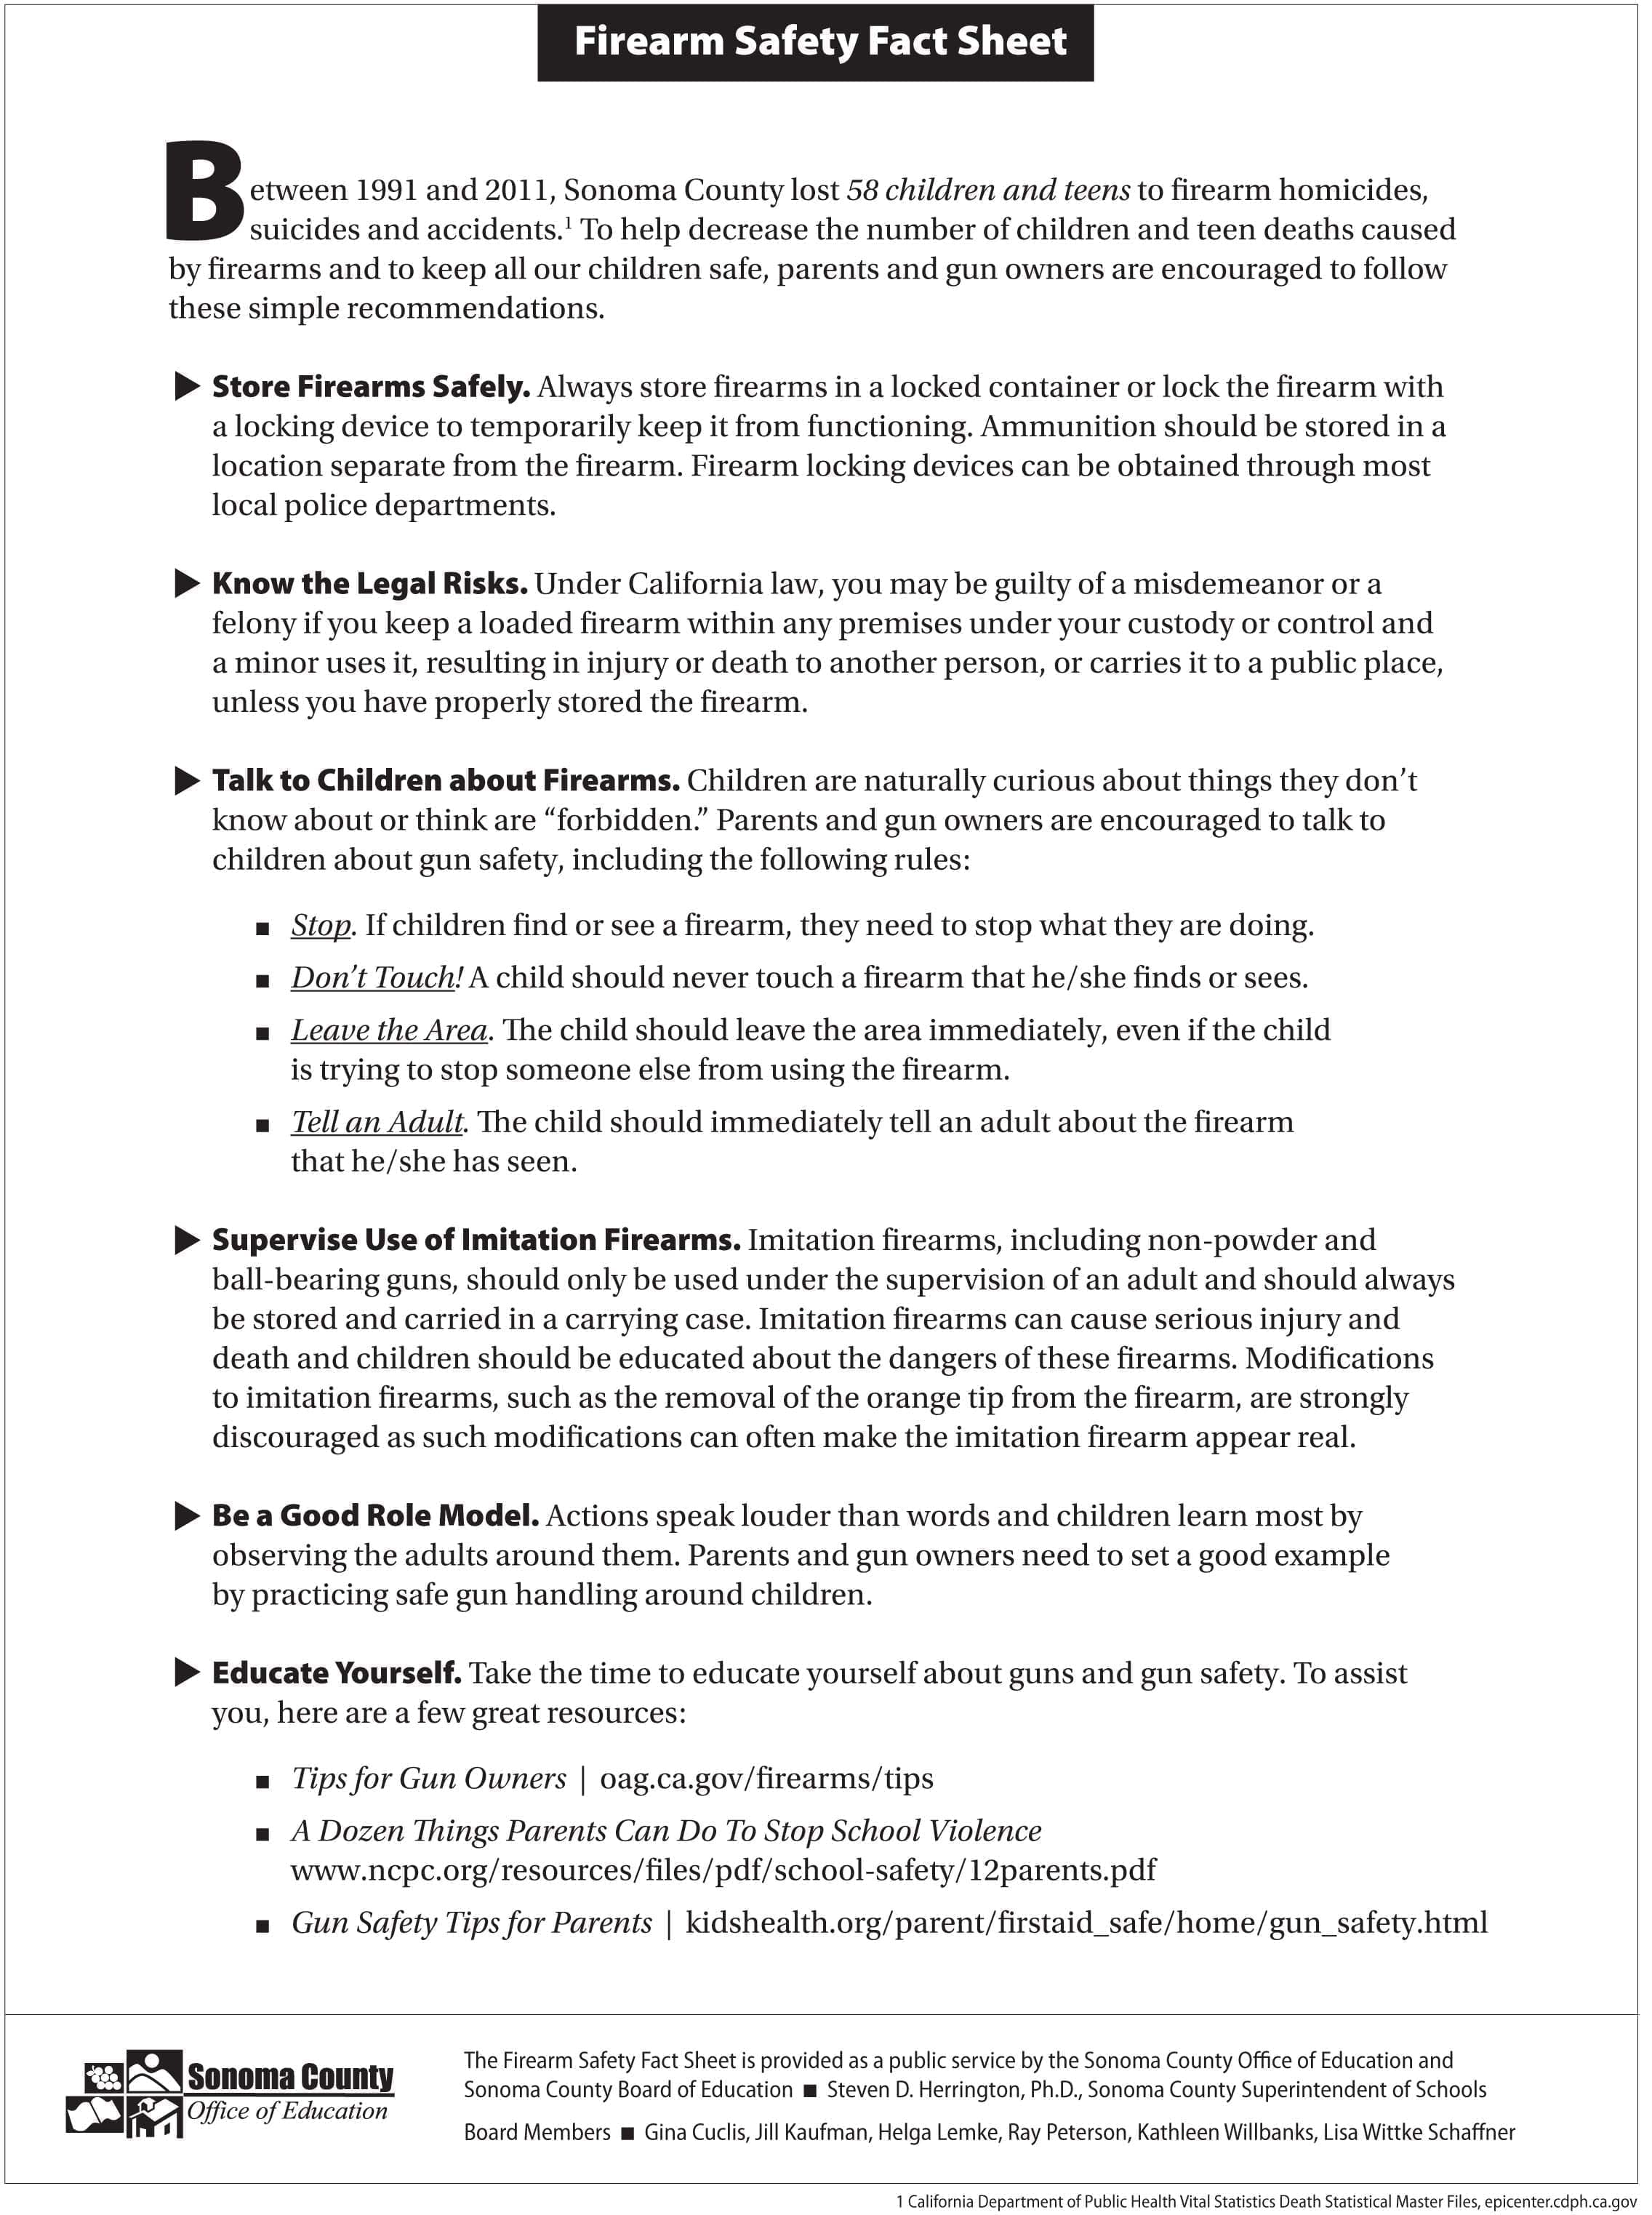 Sonoma Firearms Safety Fact Sheet.pdf